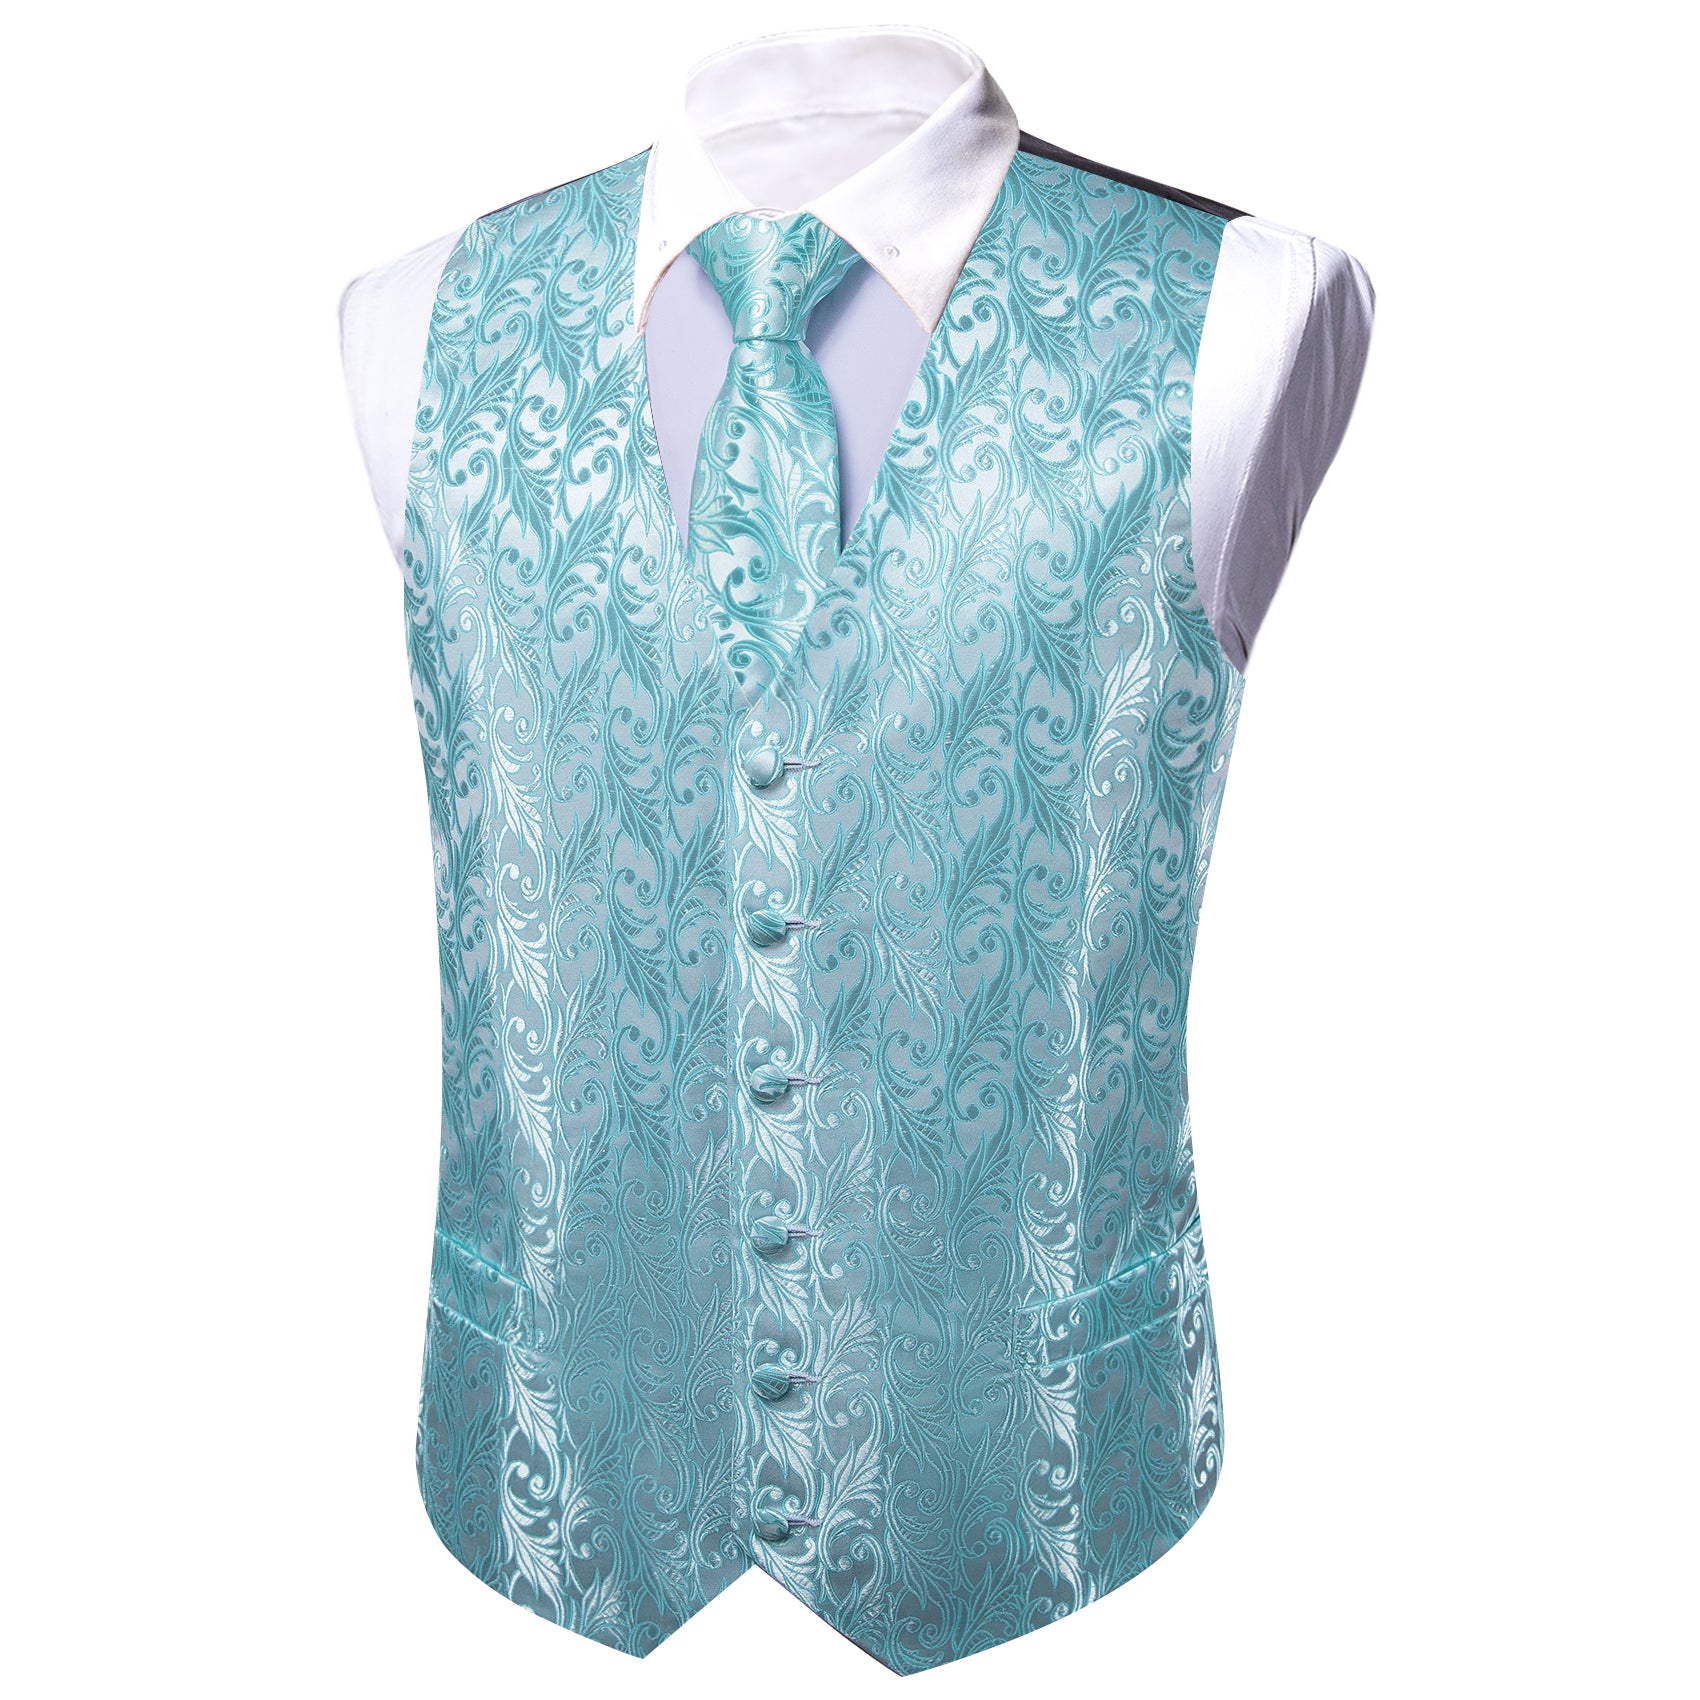 Barry.wang Men's Vest Aqua Floral Silk Vest Tie Hanky Cufflinks Set Fashion